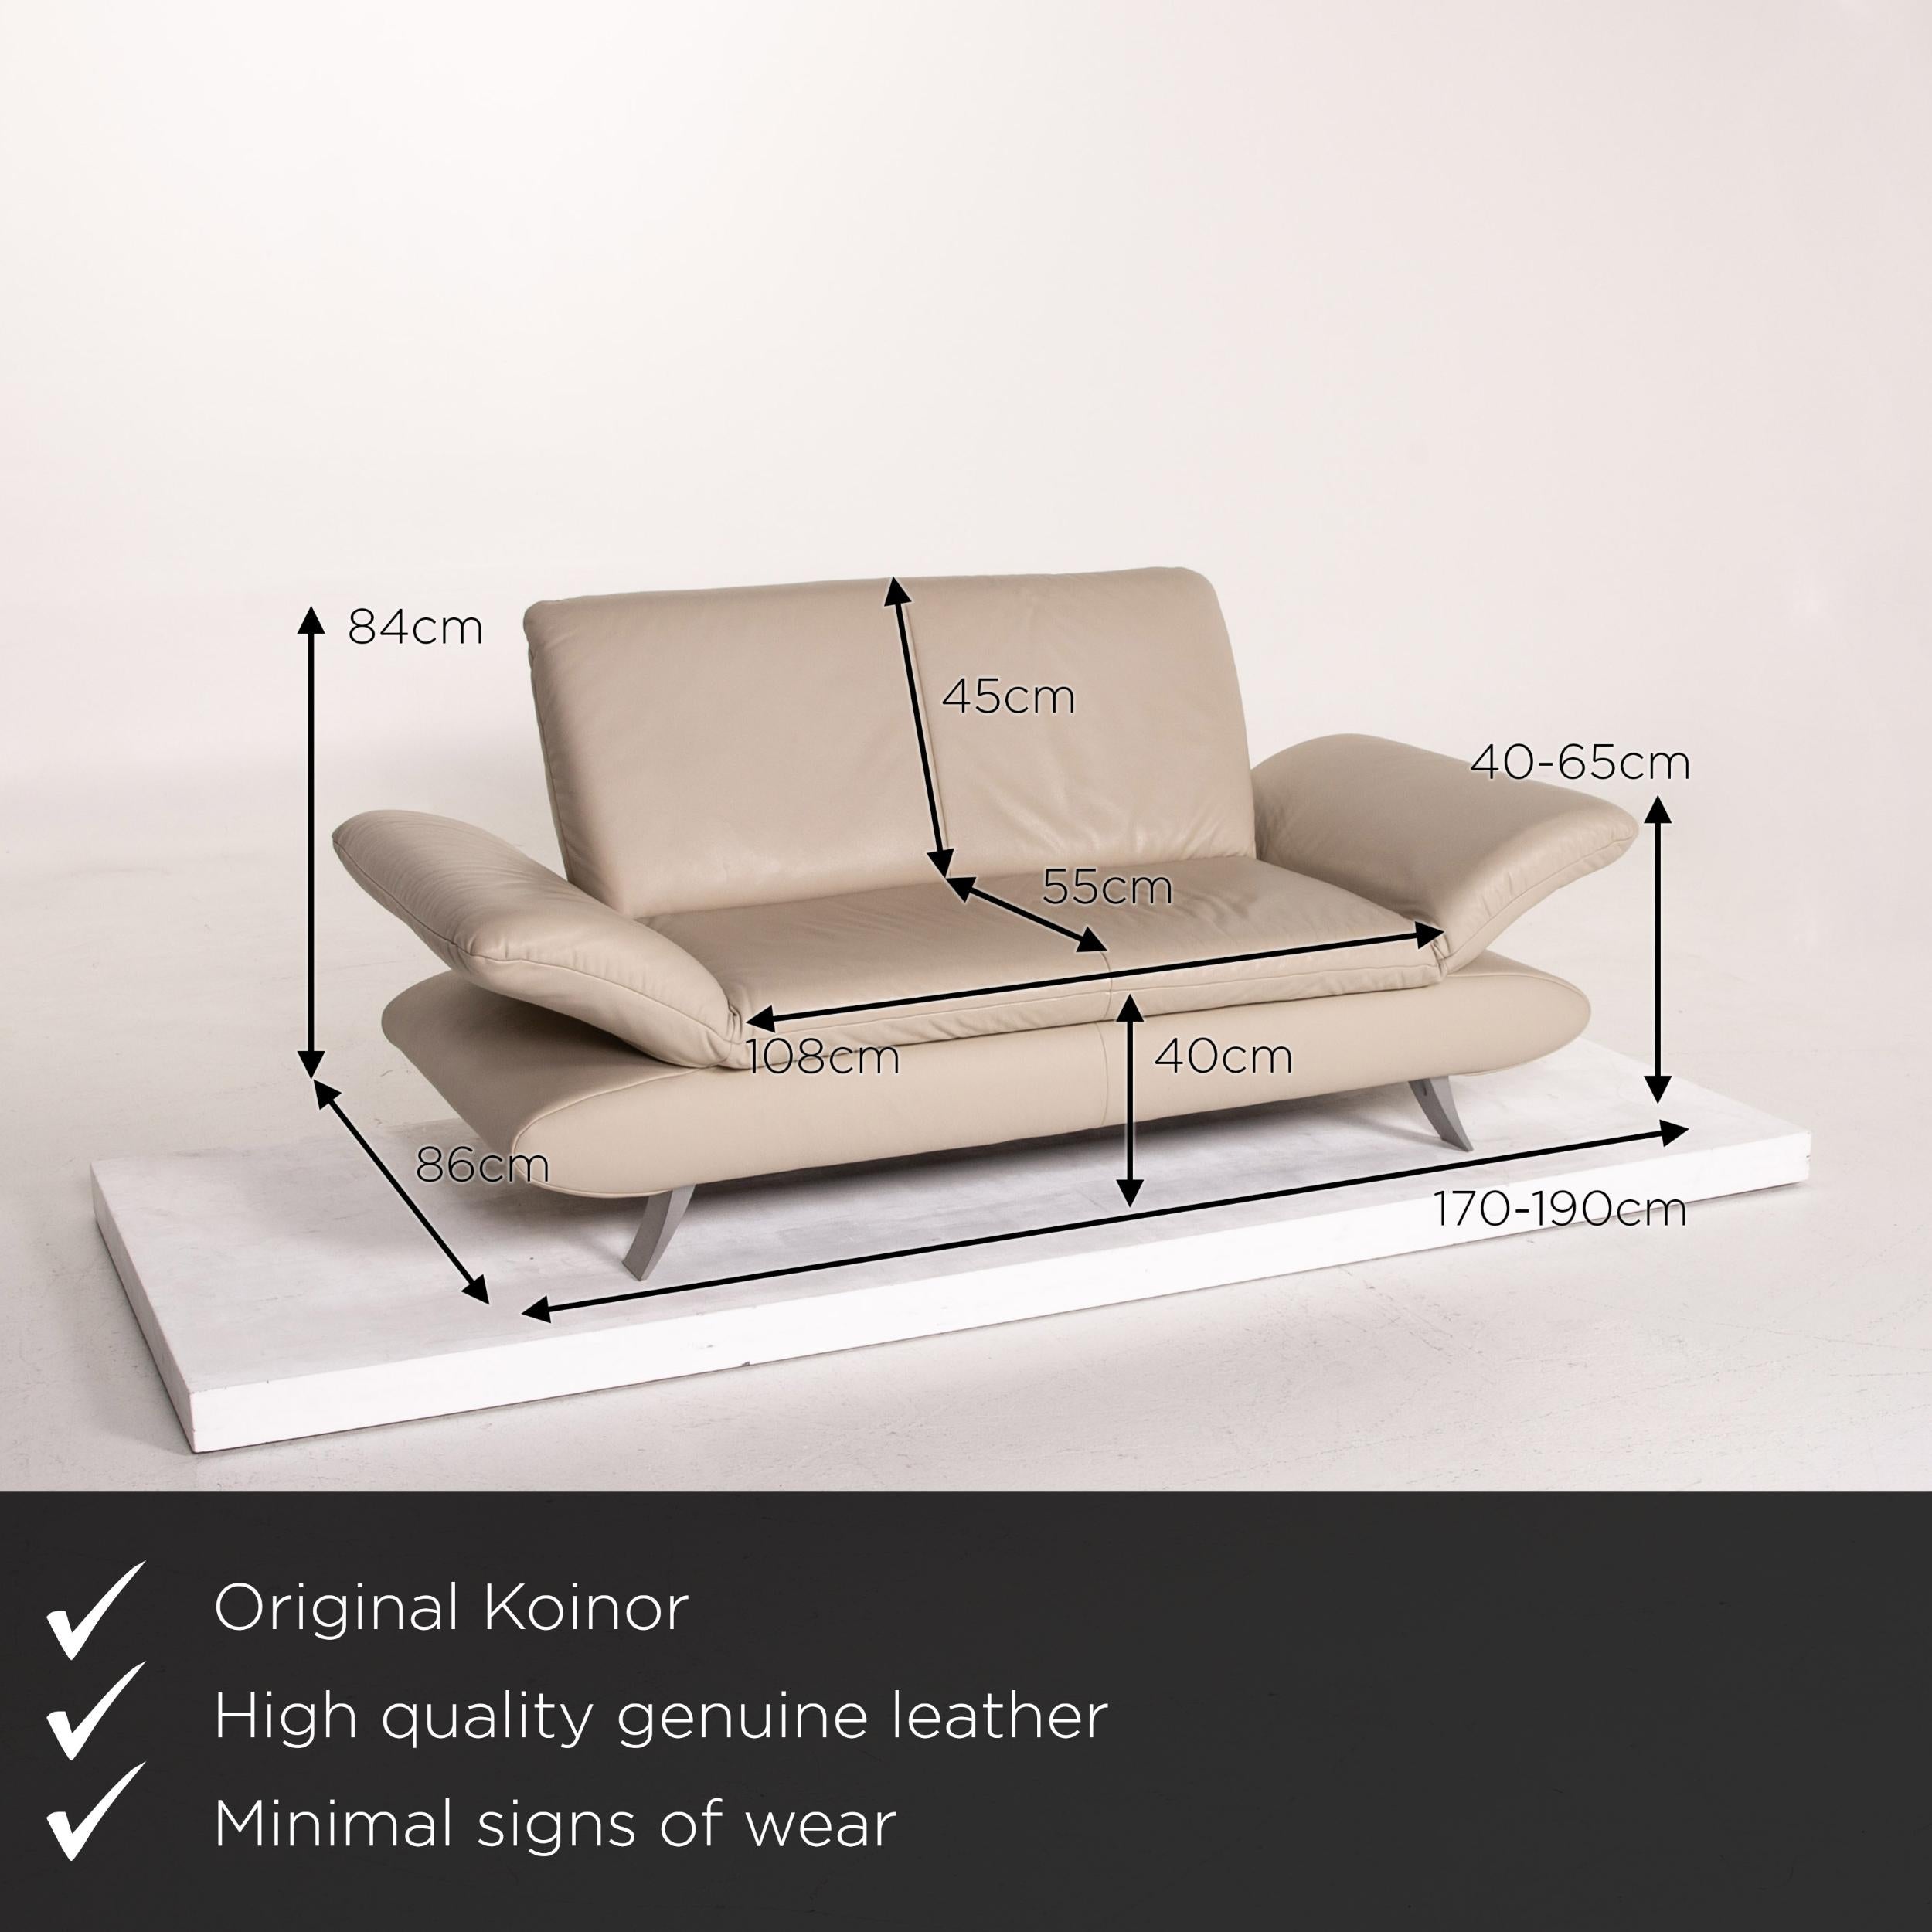 Modern Koinor Rossini Leather Sofa Set Beige Taupe 1 Three-Seat 1 Two-Seat